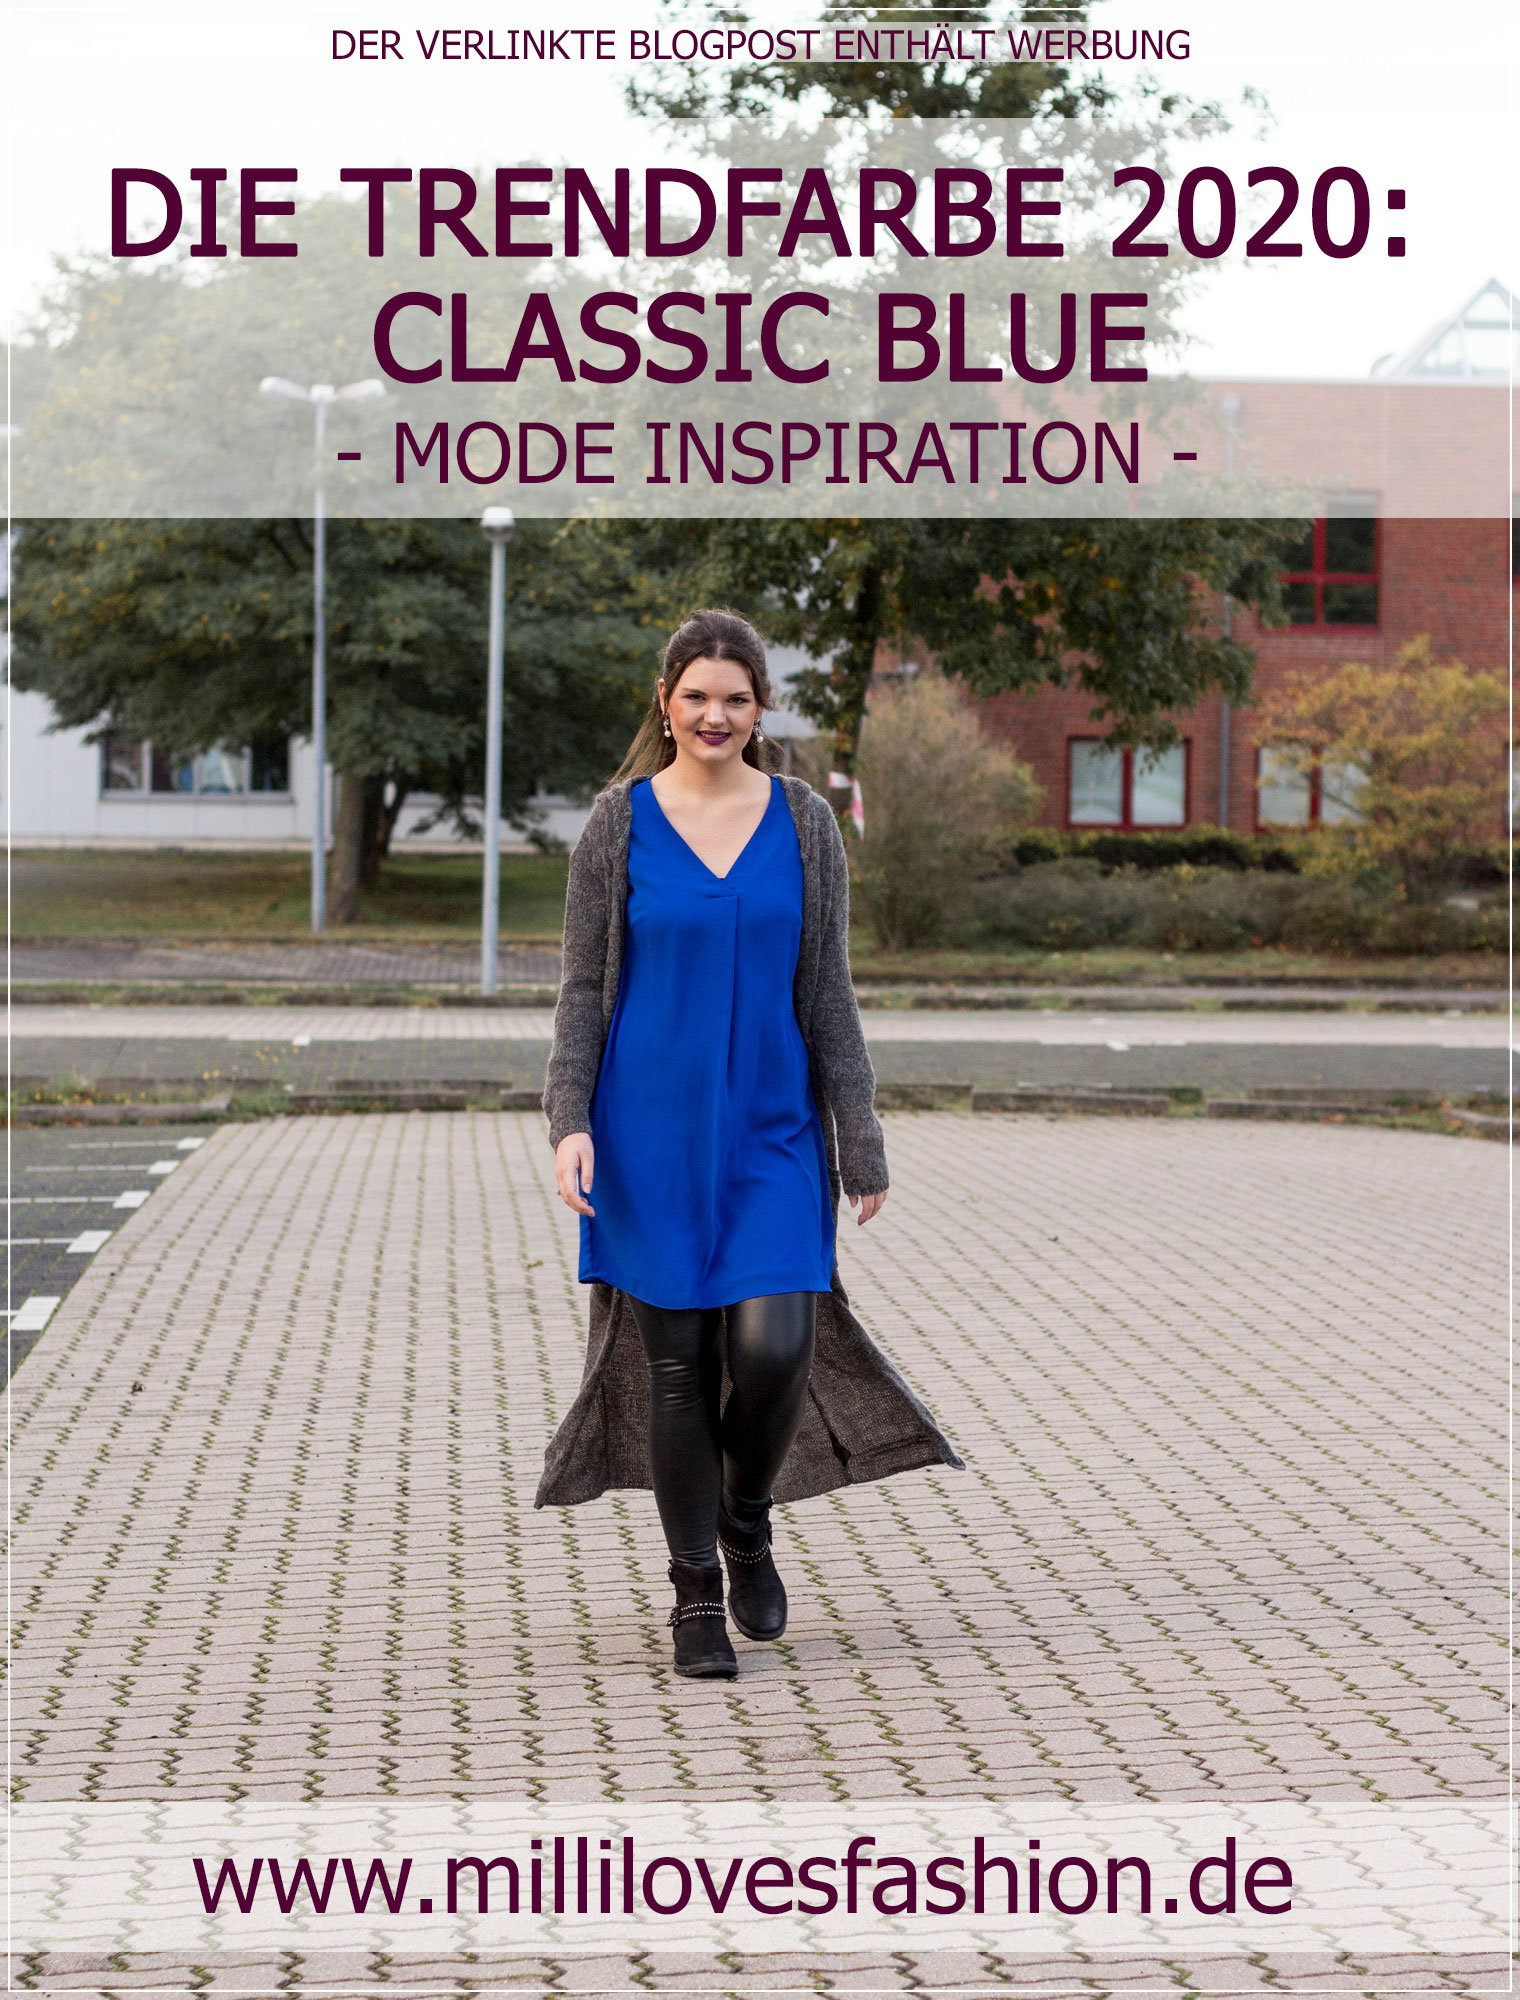 Pantone, Trendfarbe, Classic Blue, Winteroutfit, Modetrend, Styleguide, Outfitinspiration, Modebloggerin, Fashionbloggerin, Modeblog, Ruhrgebiet